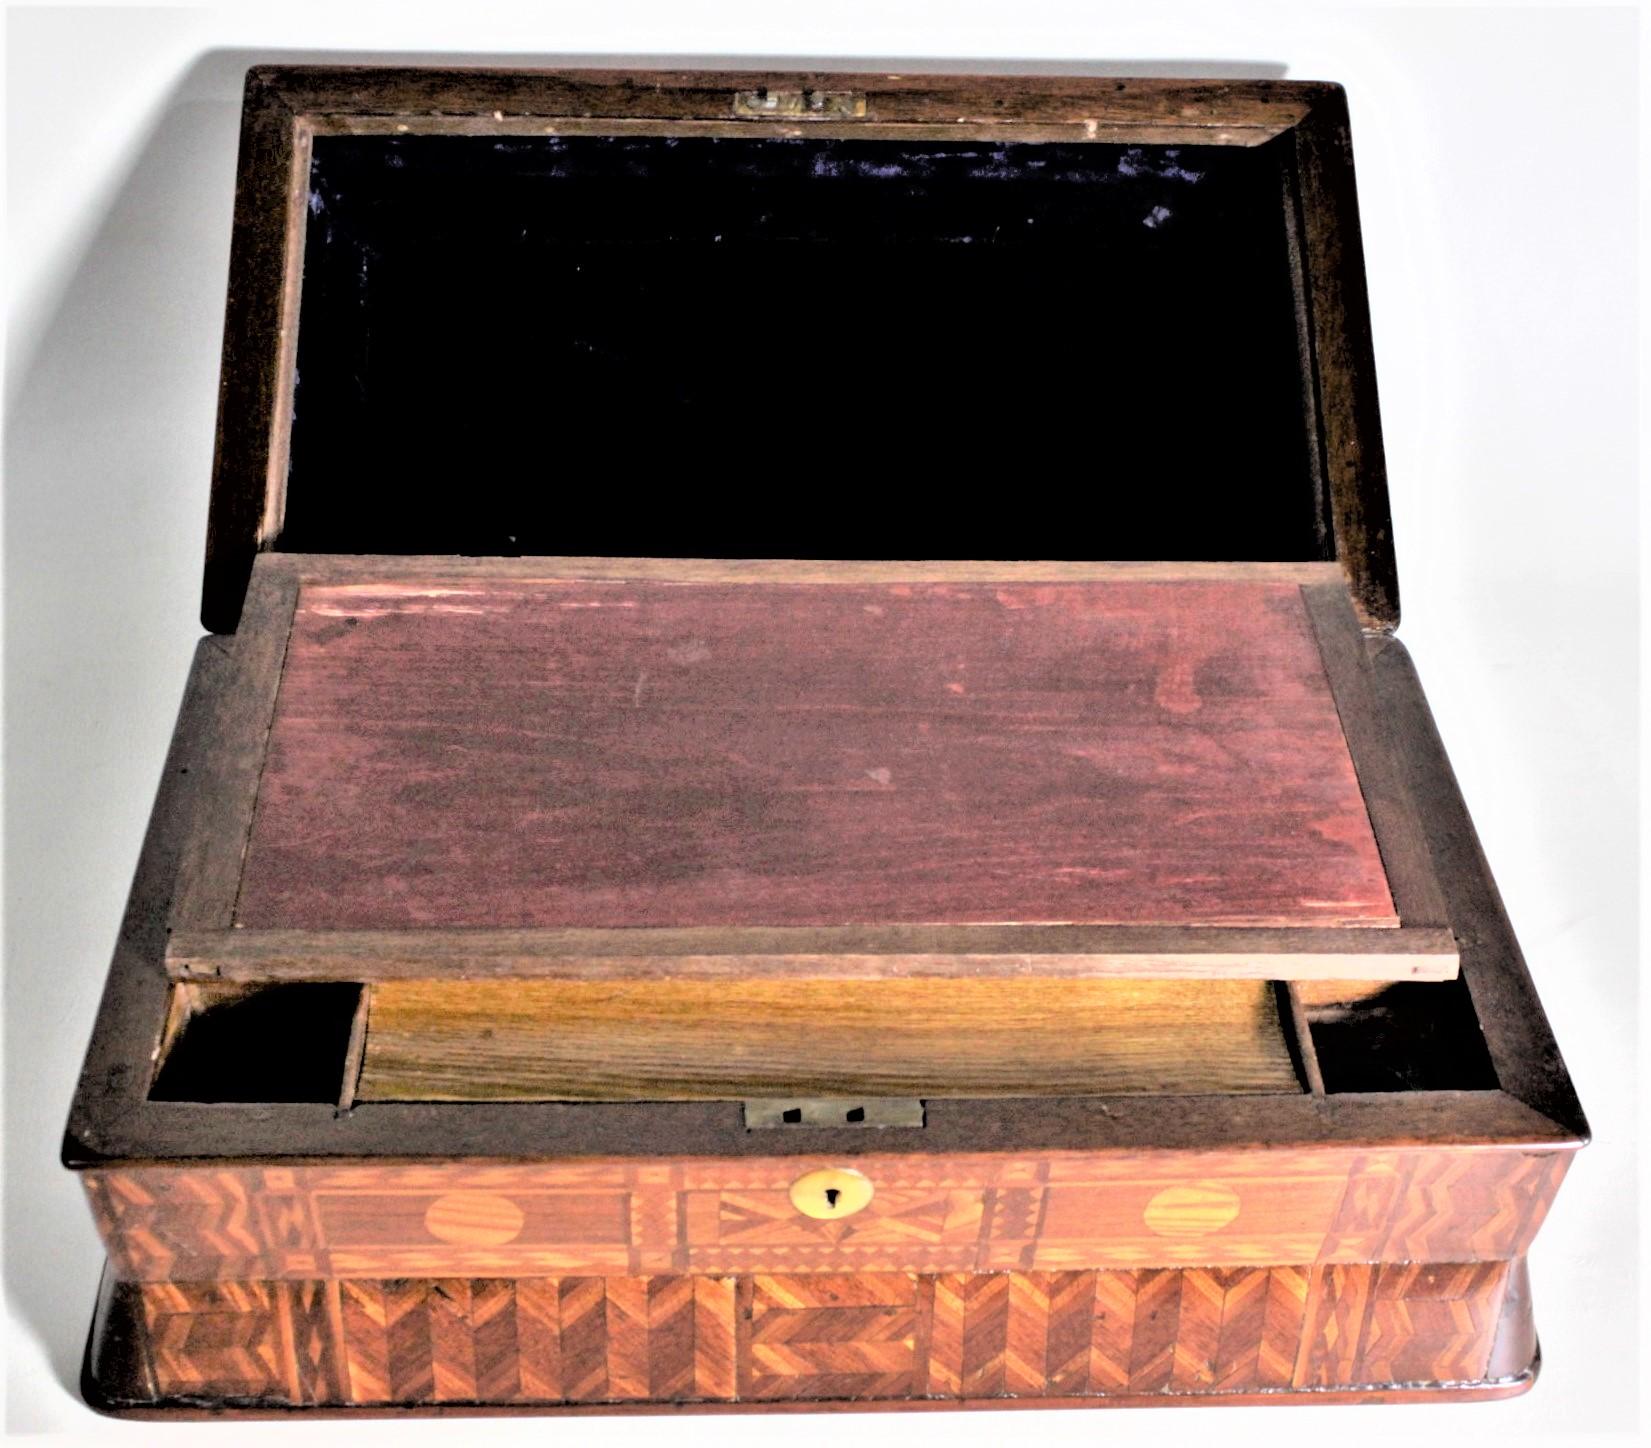 Superb Antique Folk Art Parquetry Casket Styled Writing Box or Lap Desk For Sale 4